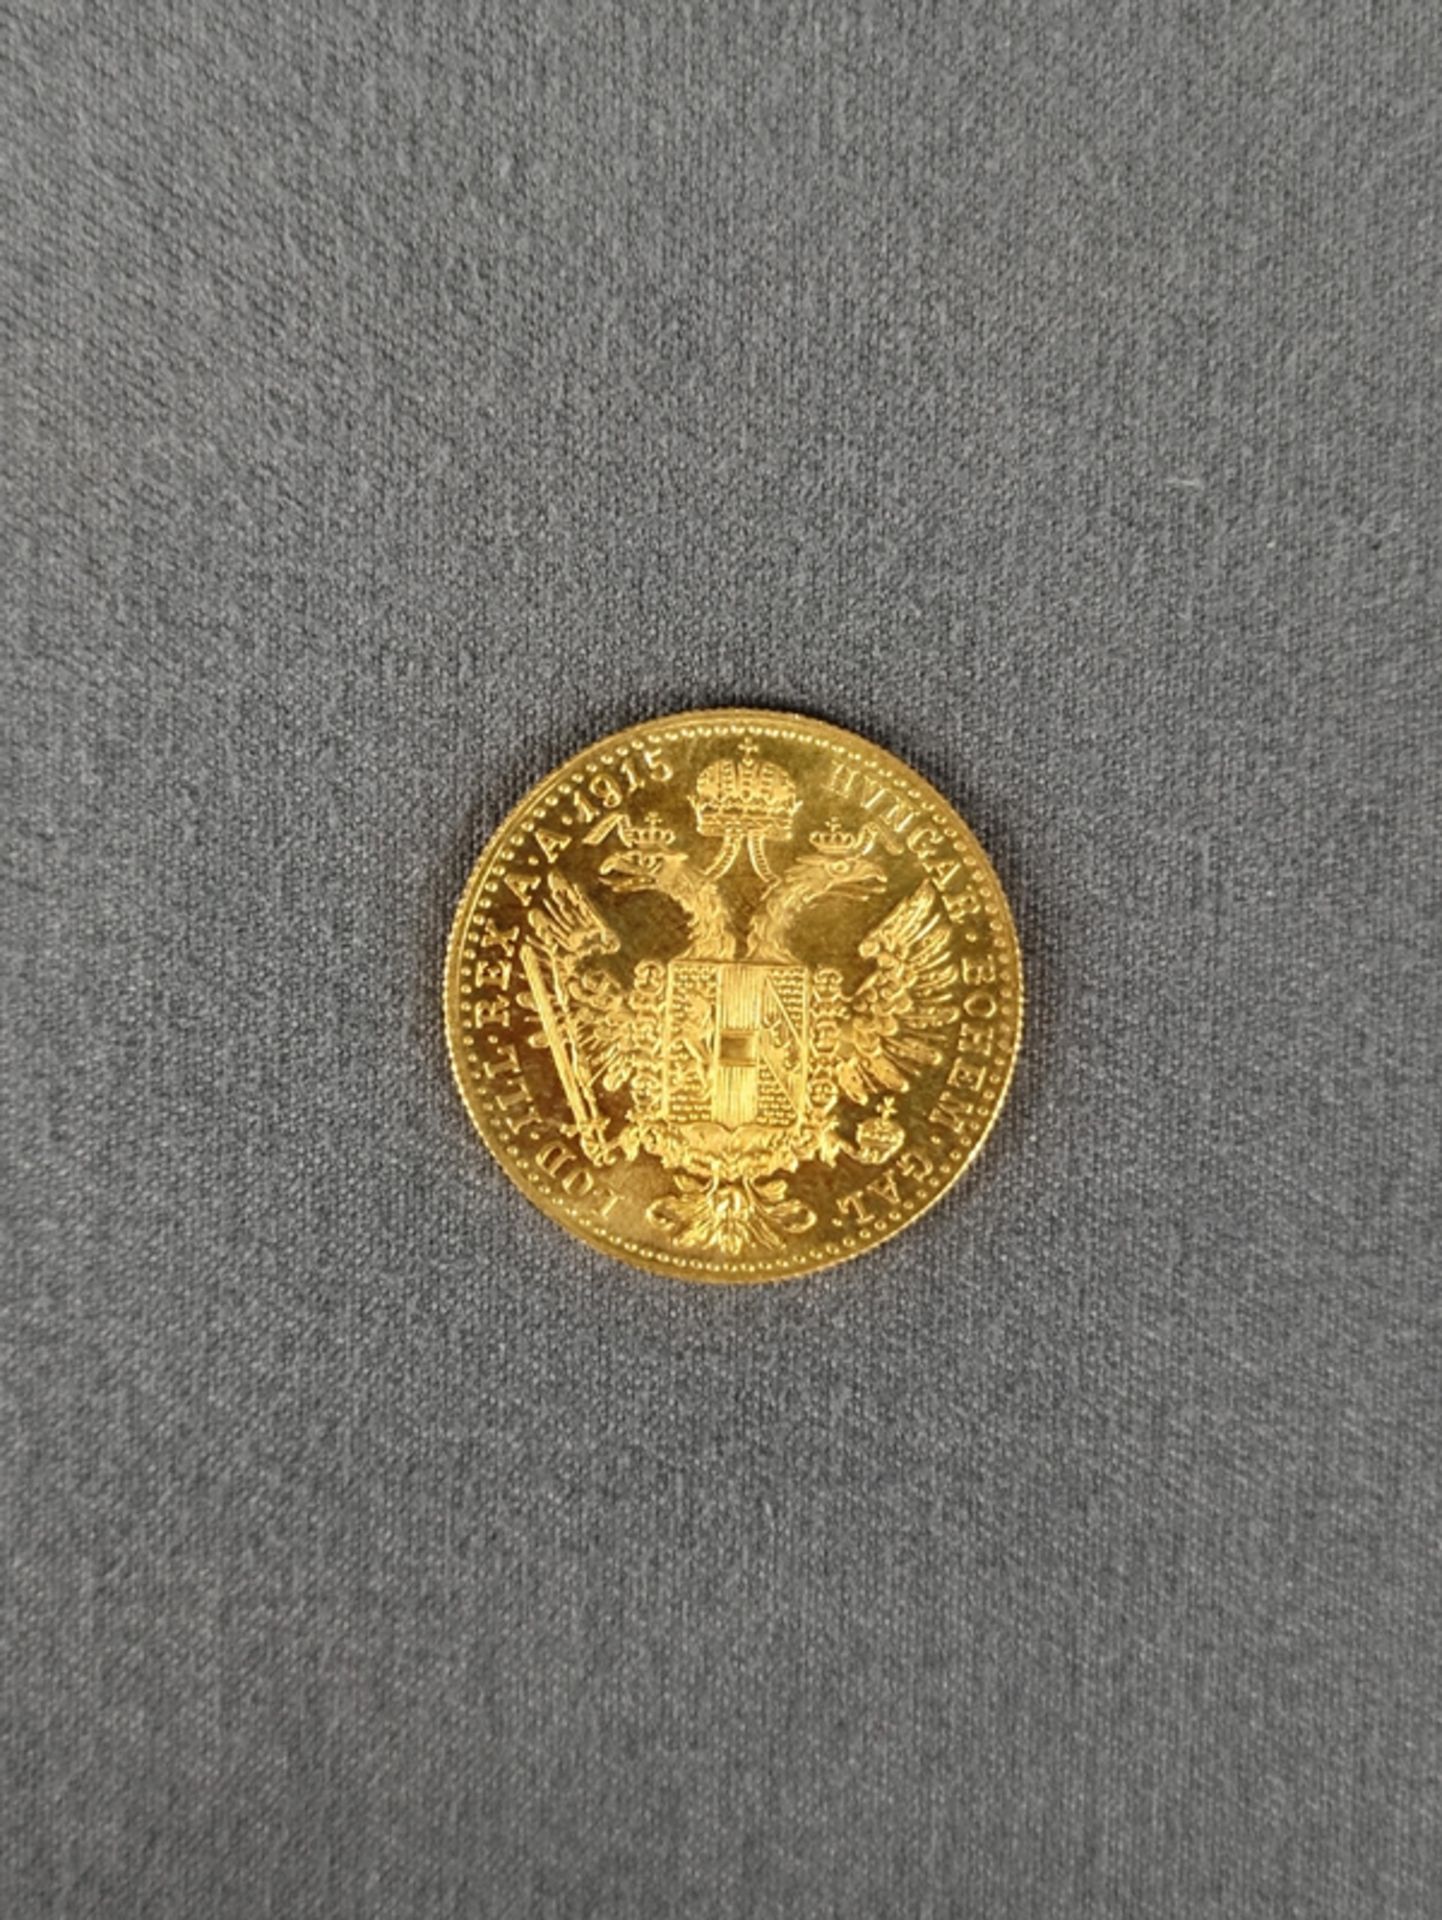 Goldmünze, 1 Dukat, Franz Josef I., Österreich, 1915, 986 Gold, 3,4g, Diameter 20mm - Bild 2 aus 2